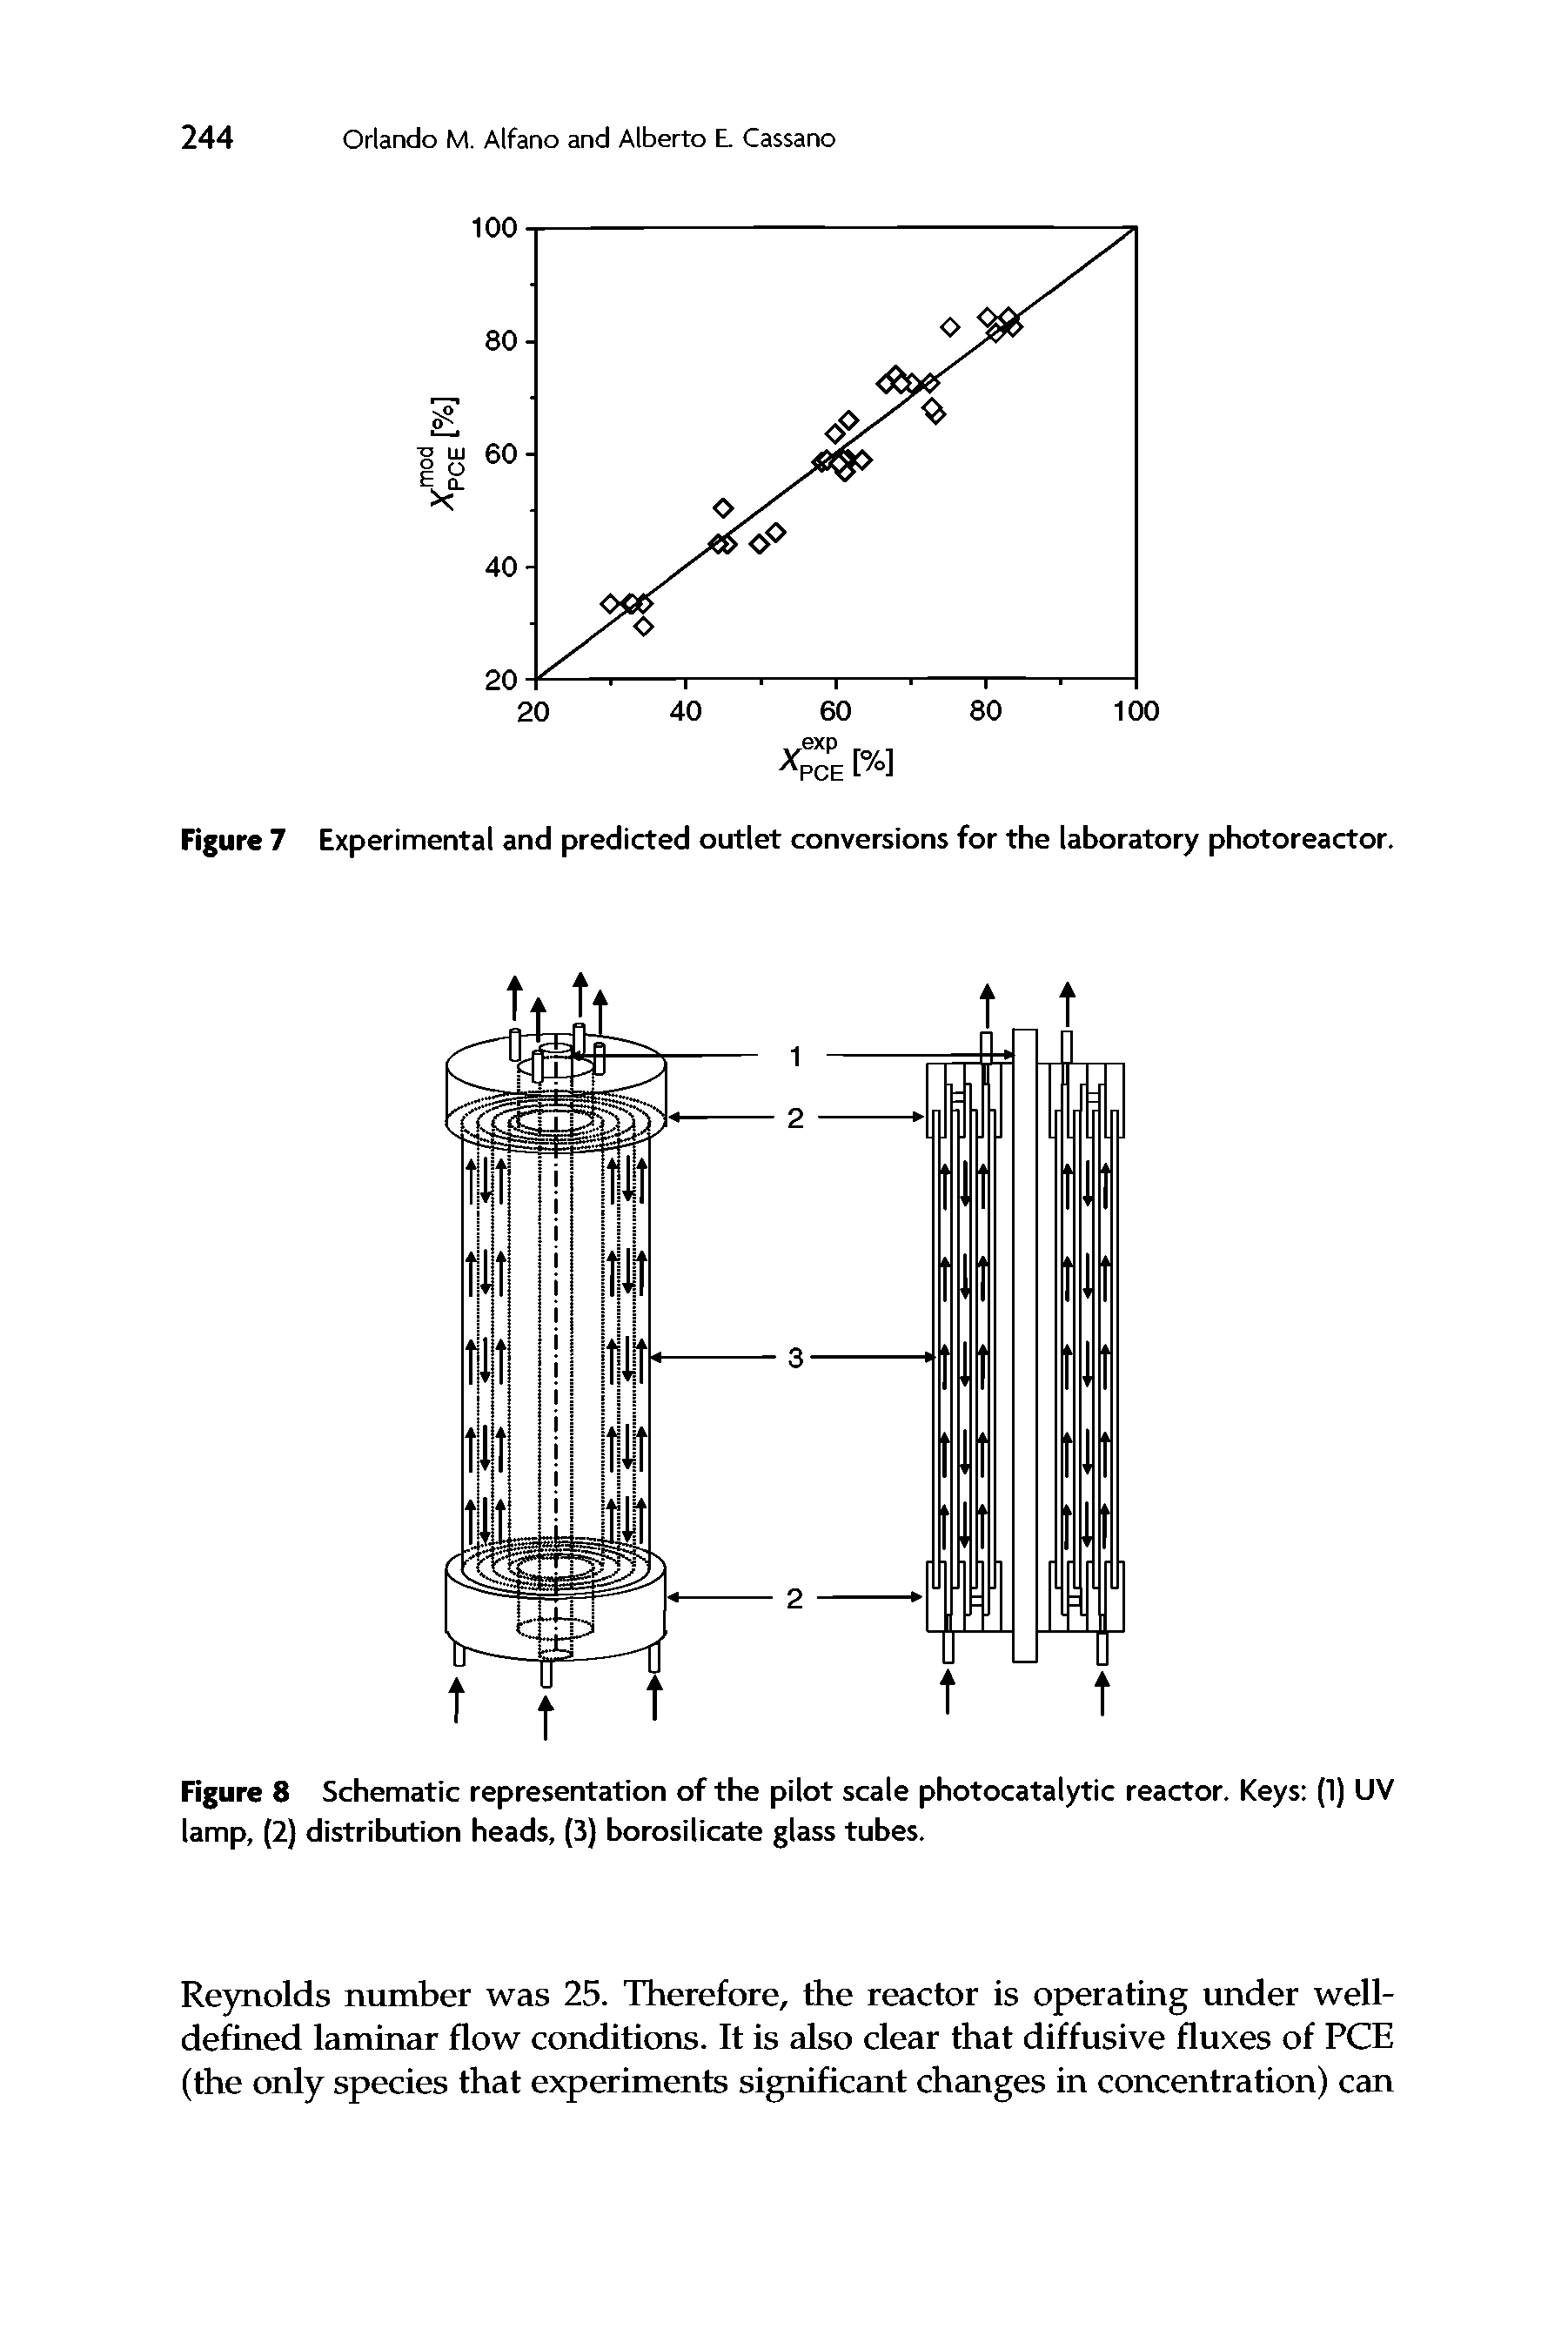 Figure 8 Schematic representation of the pilot scale photocatalytic reactor. Keys (1) UV lamp, (2) distribution heads, (3) borosilicate glass tubes.